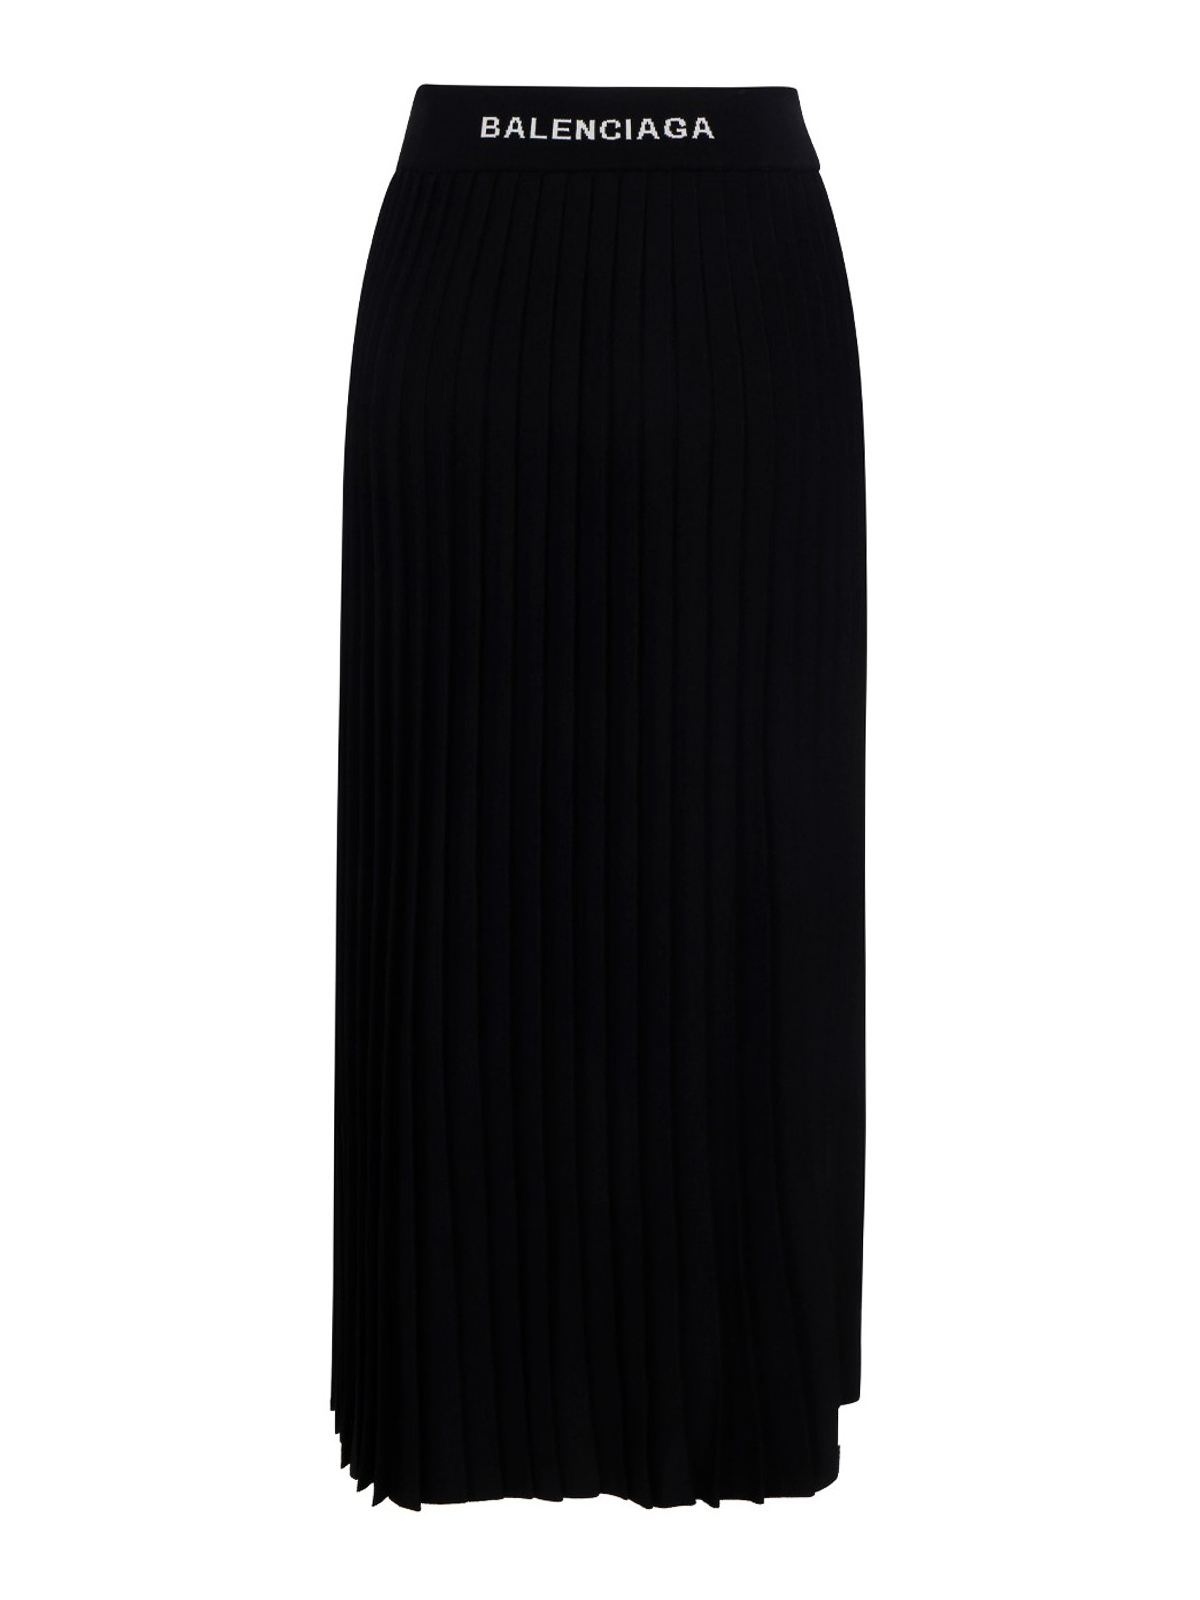 Turbulens Sympatisere Ambitiøs Long skirts Balenciaga - Viscose blend pleated skirt - 620998T51331070